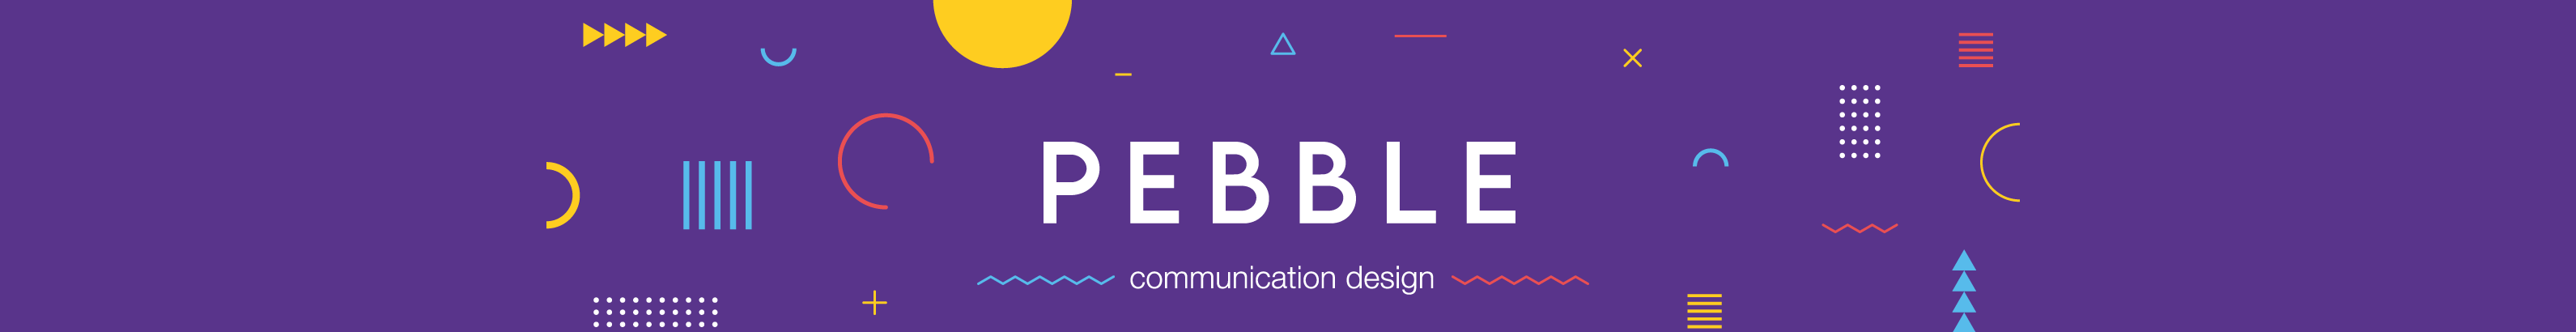 Pebble Communication Design's profile banner